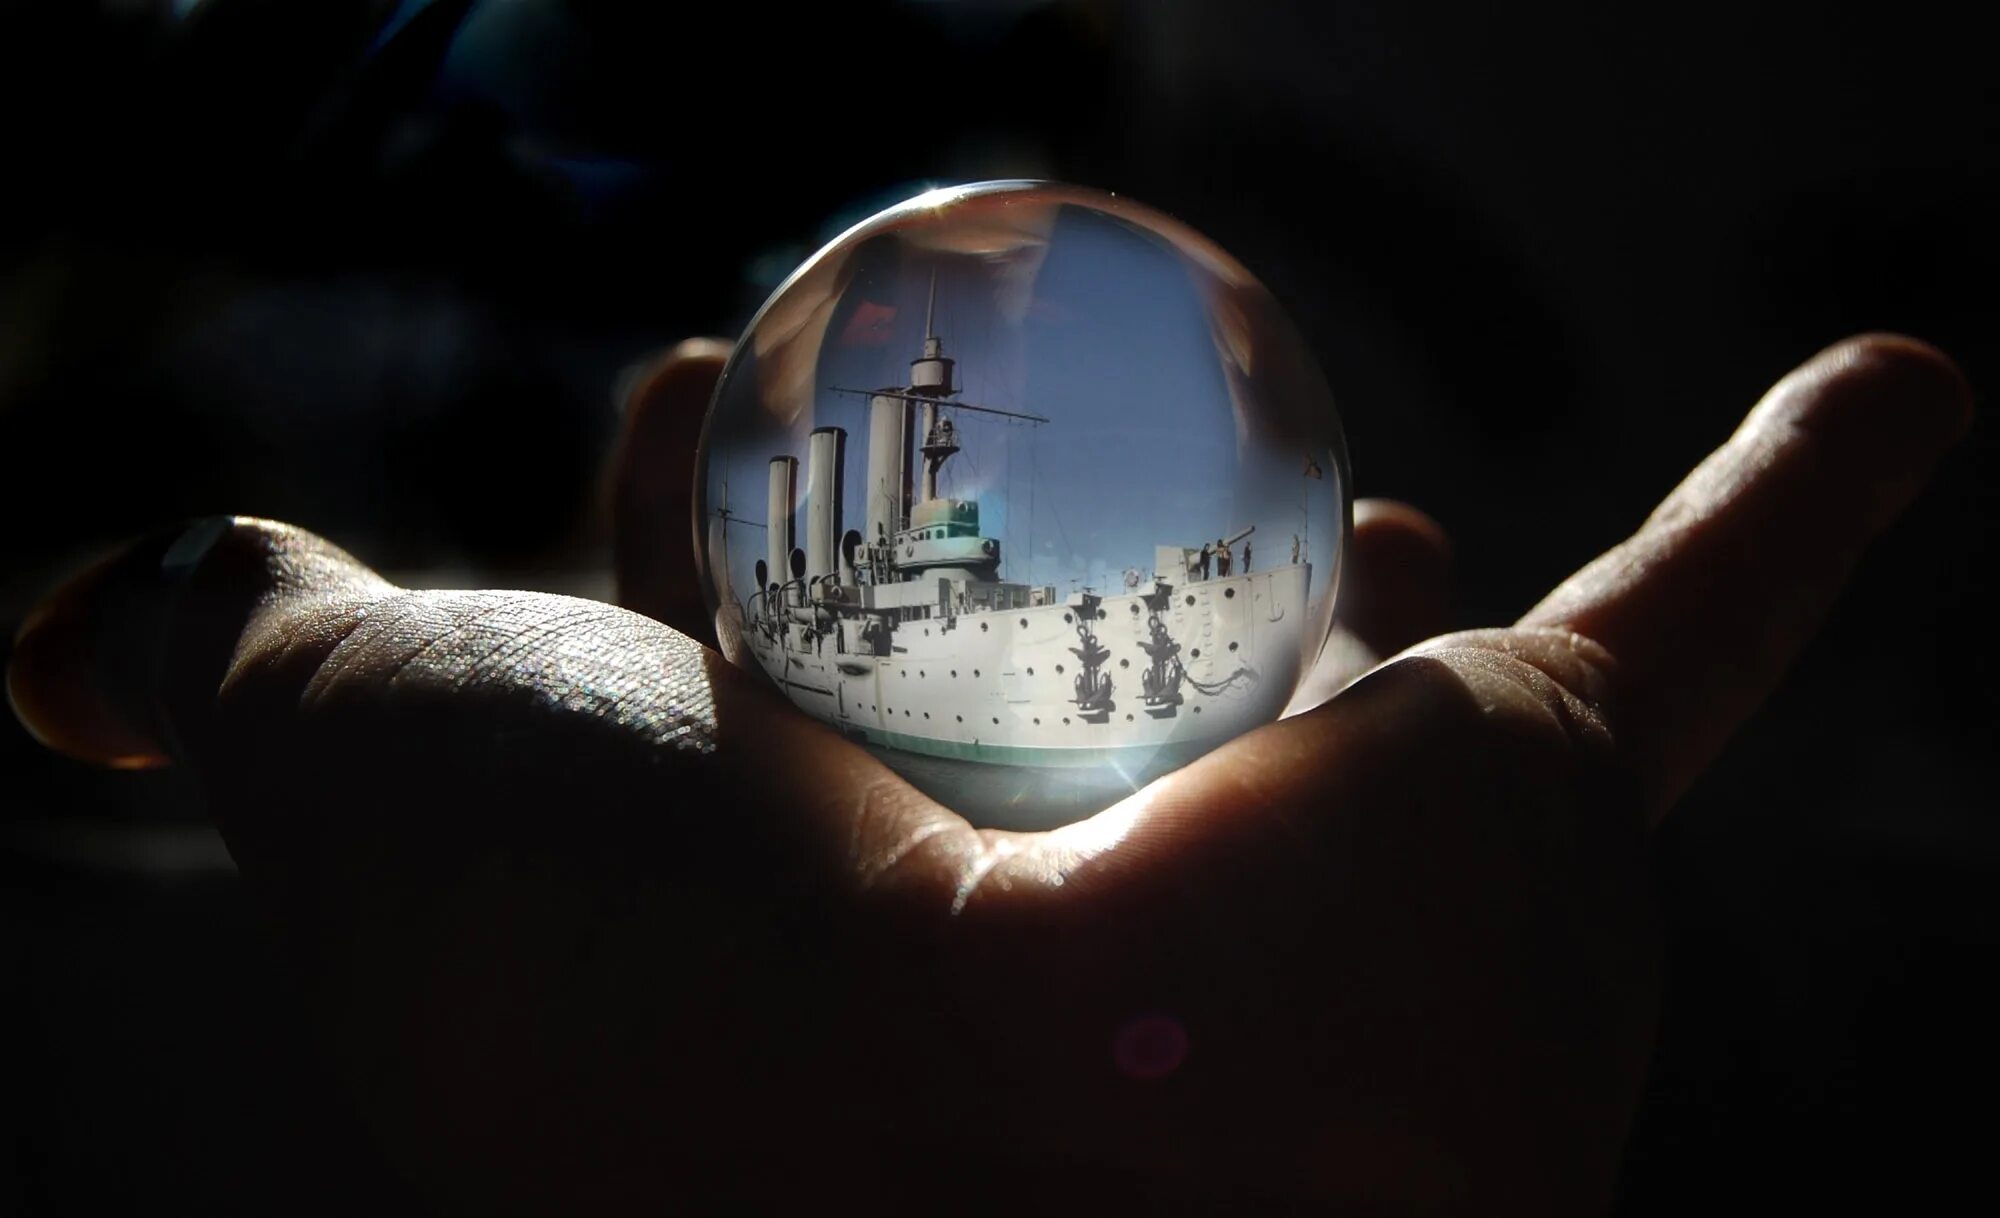 Crystal ball результаты. Хрустальный шар. Стеклянный шар мир. Стеклянный шар отражение. Стеклянный шар с миром внутри.